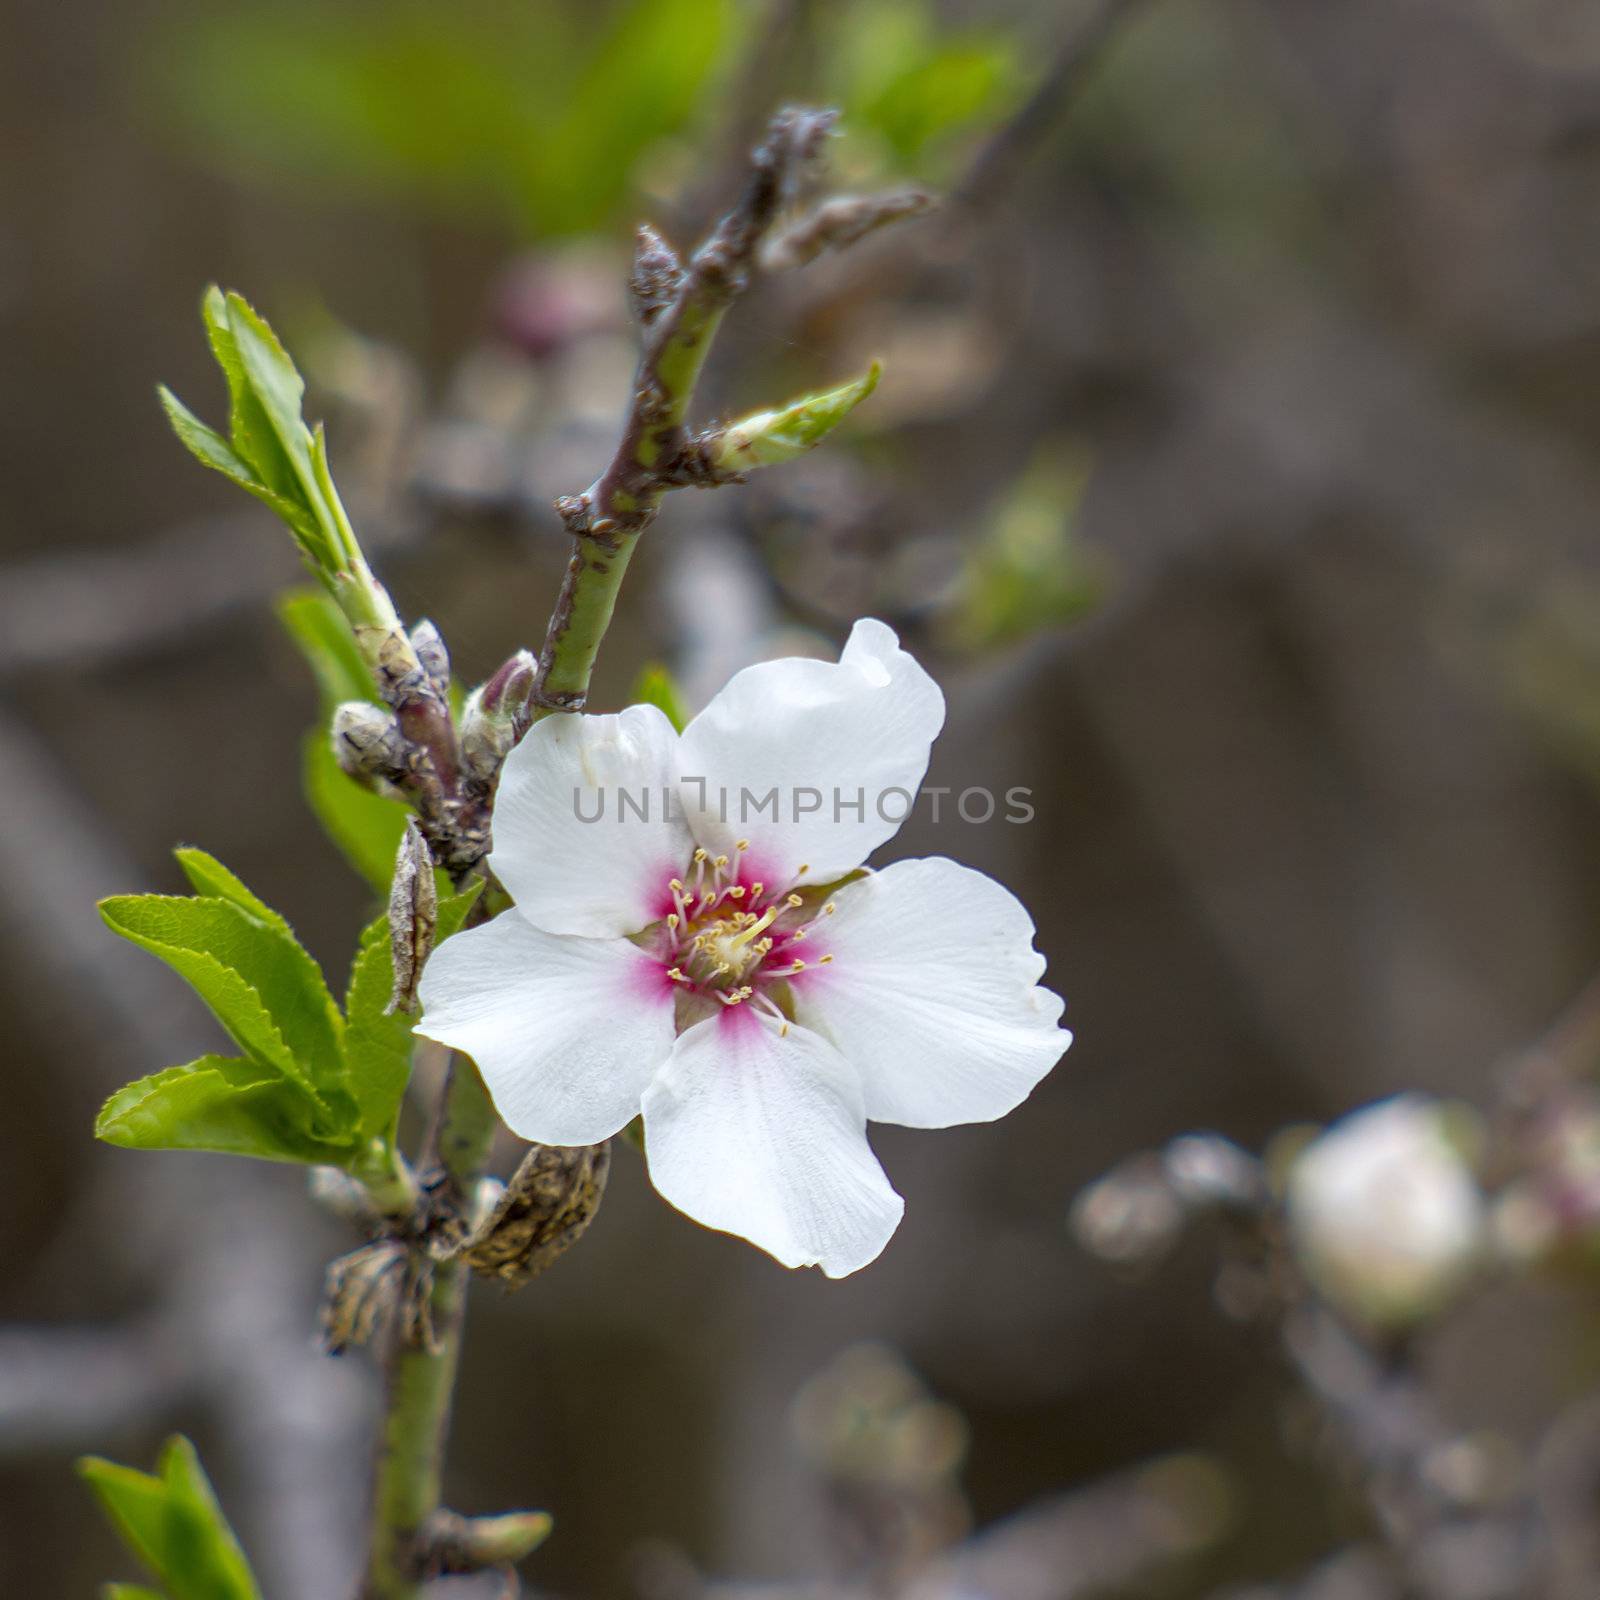 A closeup of an almond tree with white flower by miradrozdowski